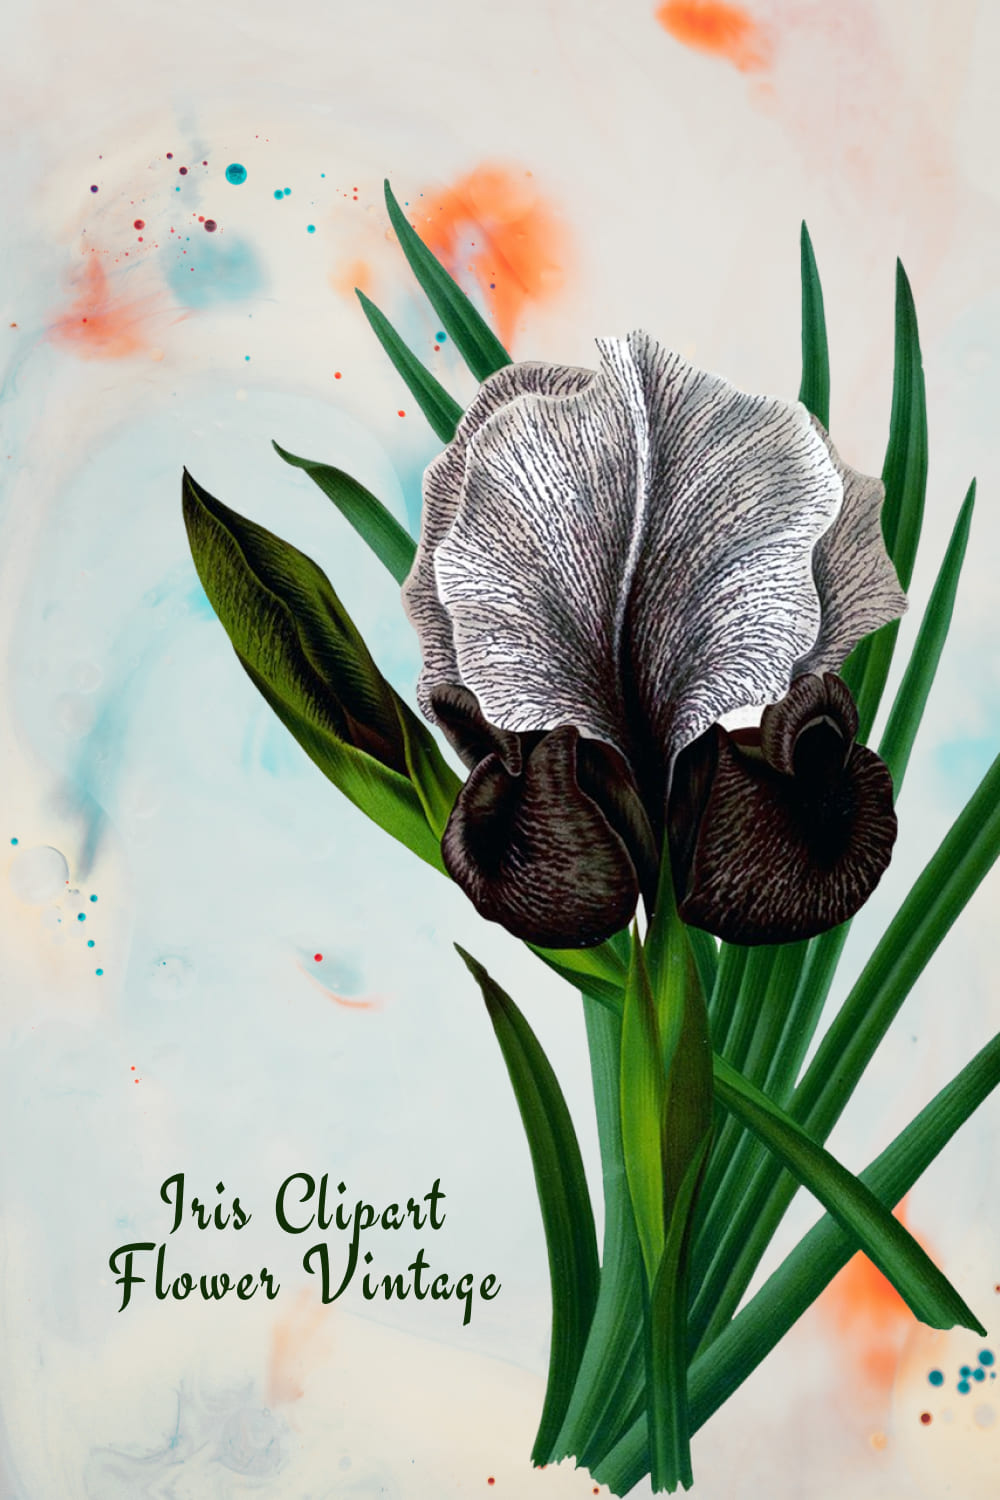 Iris Clipart Flower Mourning Vintage pinterest image.